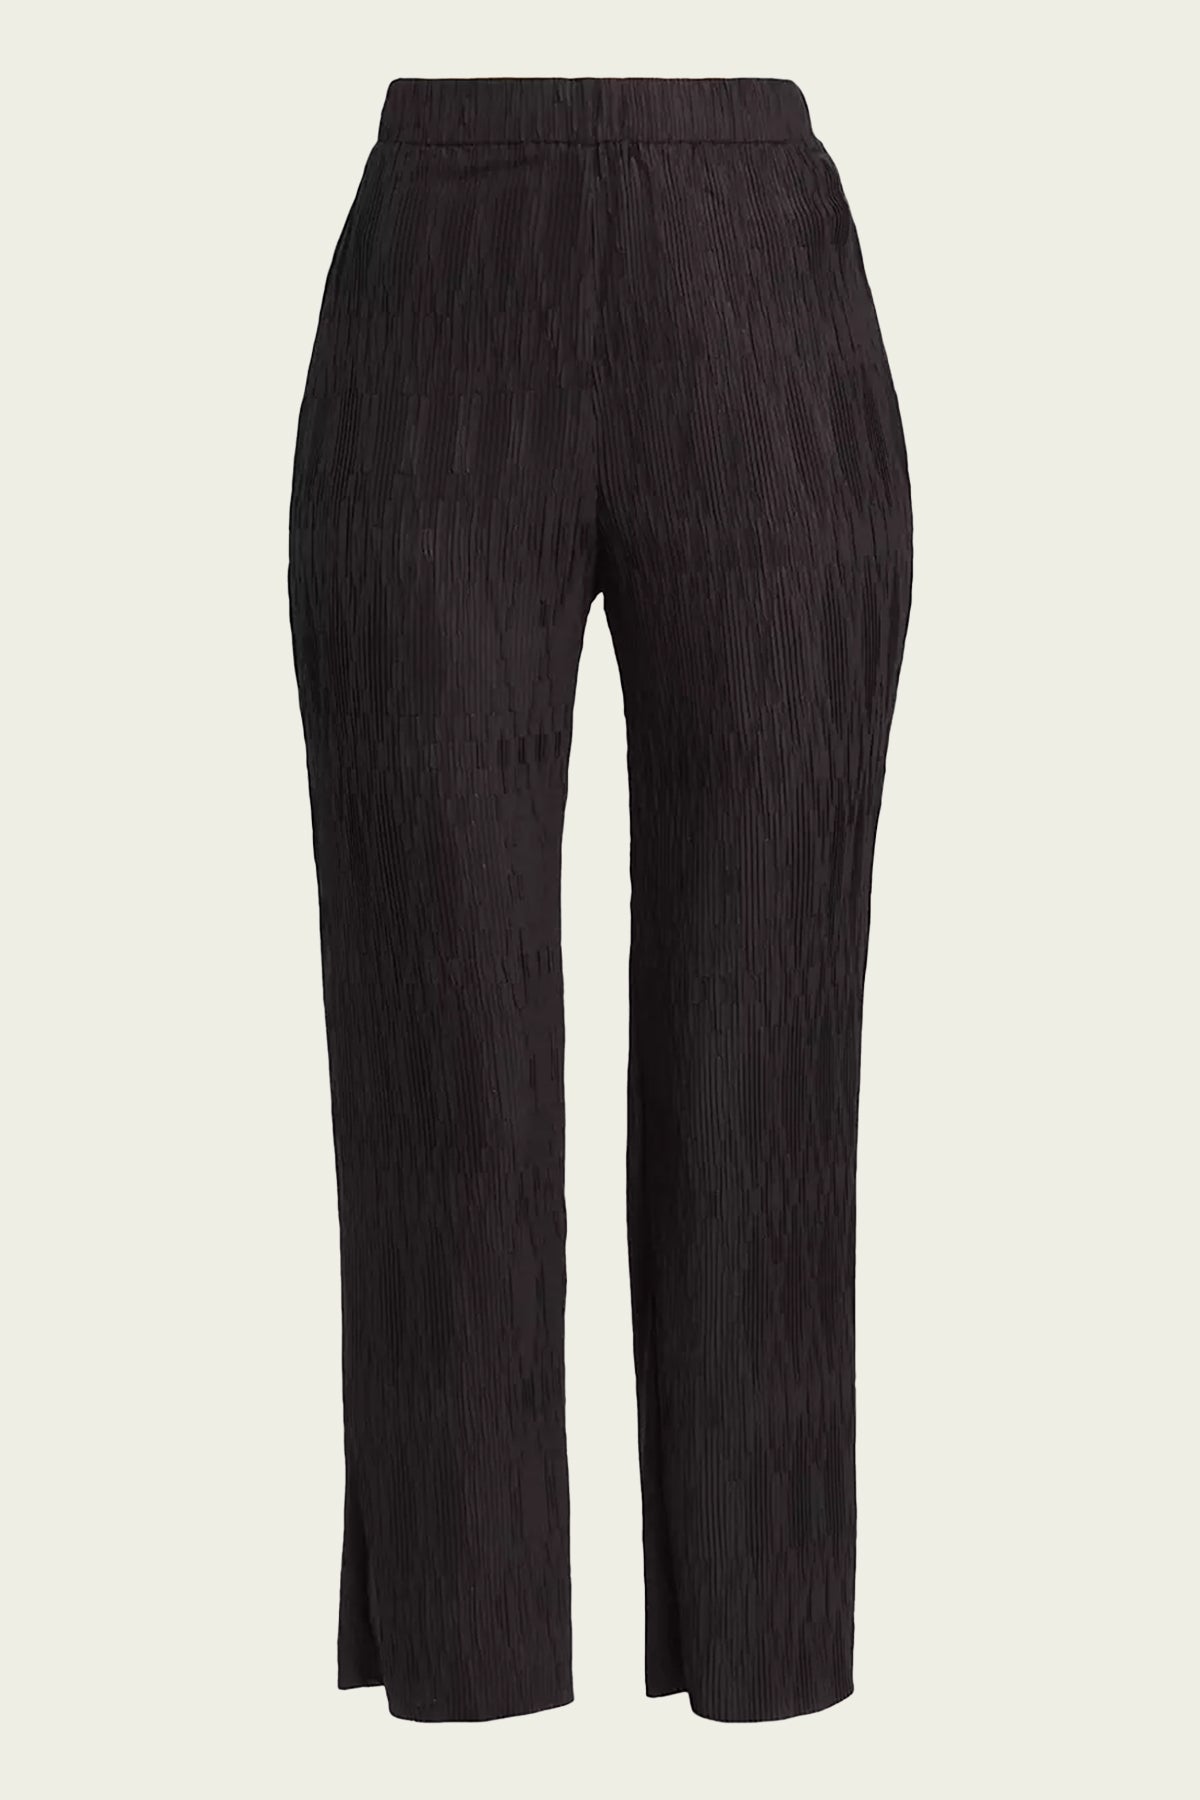 Joss Pleated Cropped Pants in Black - shop-olivia.com